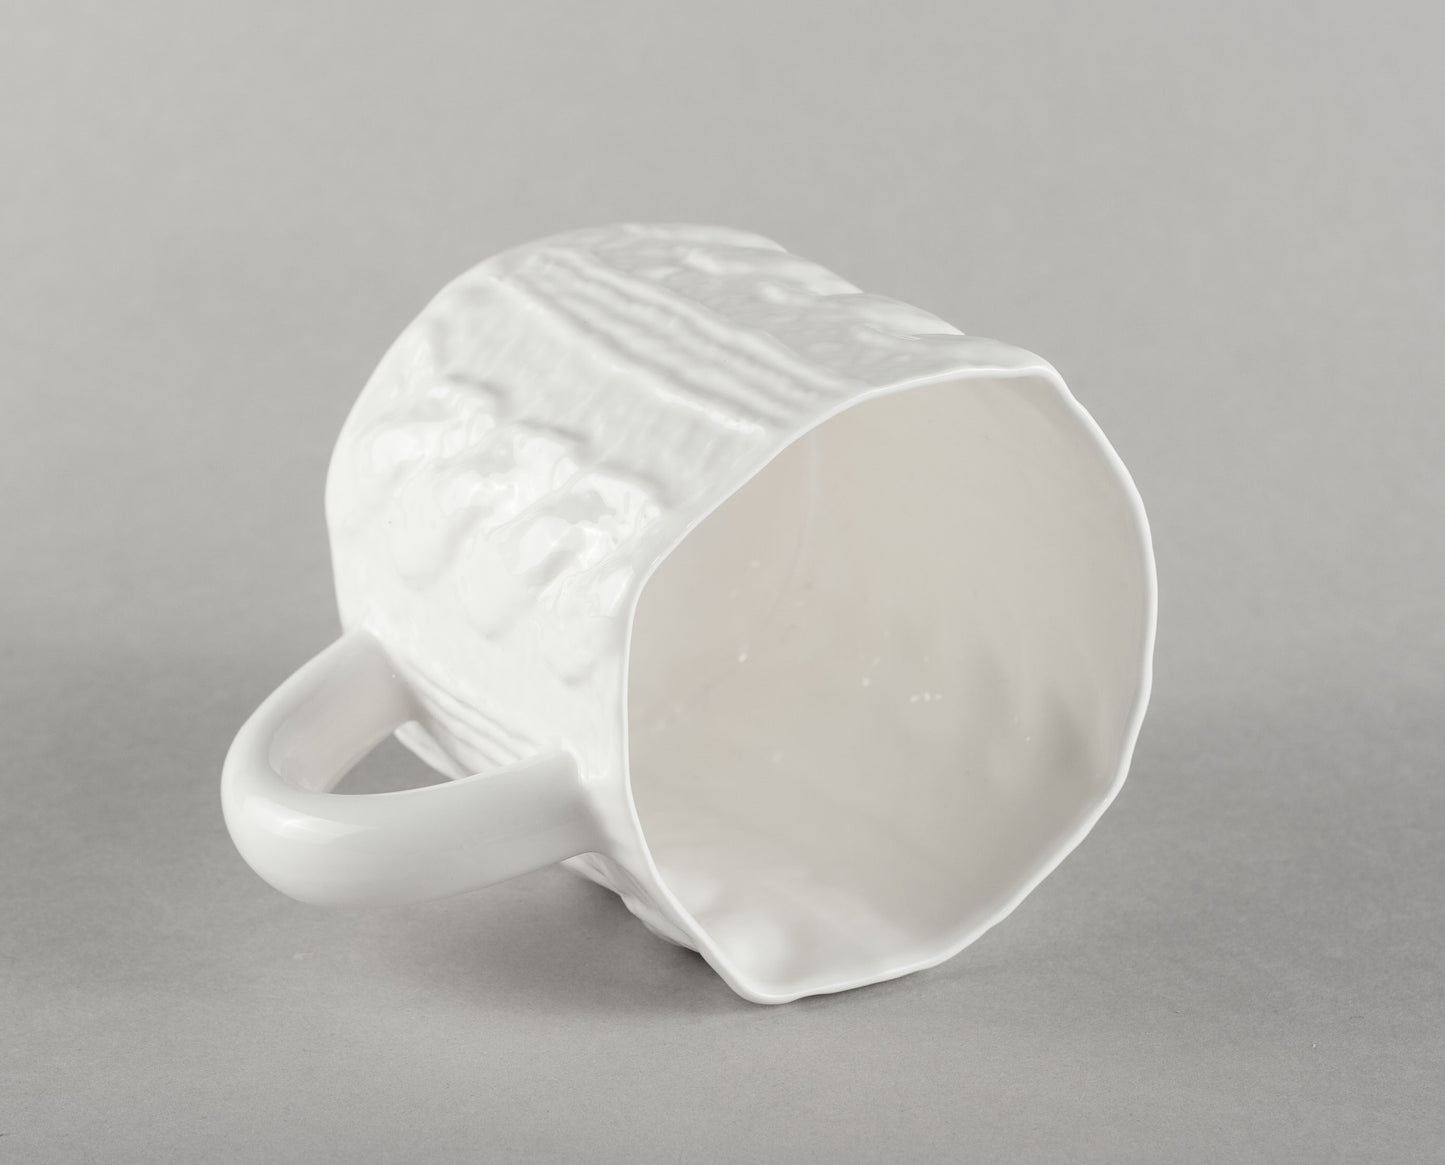 Porcelain Knitted Tea Mug